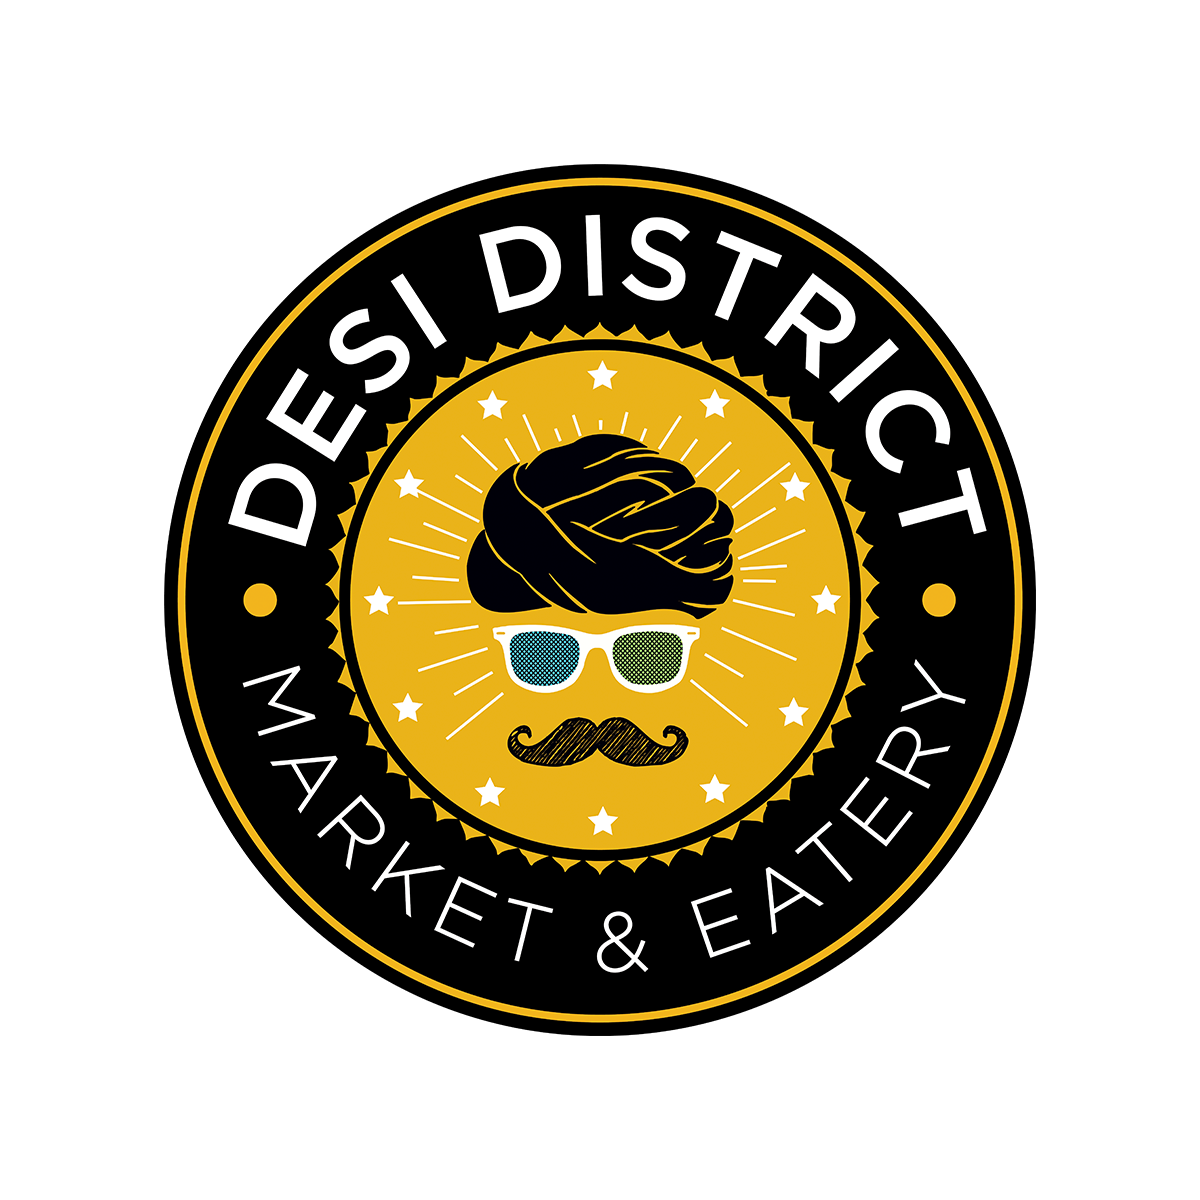 Desi District contact